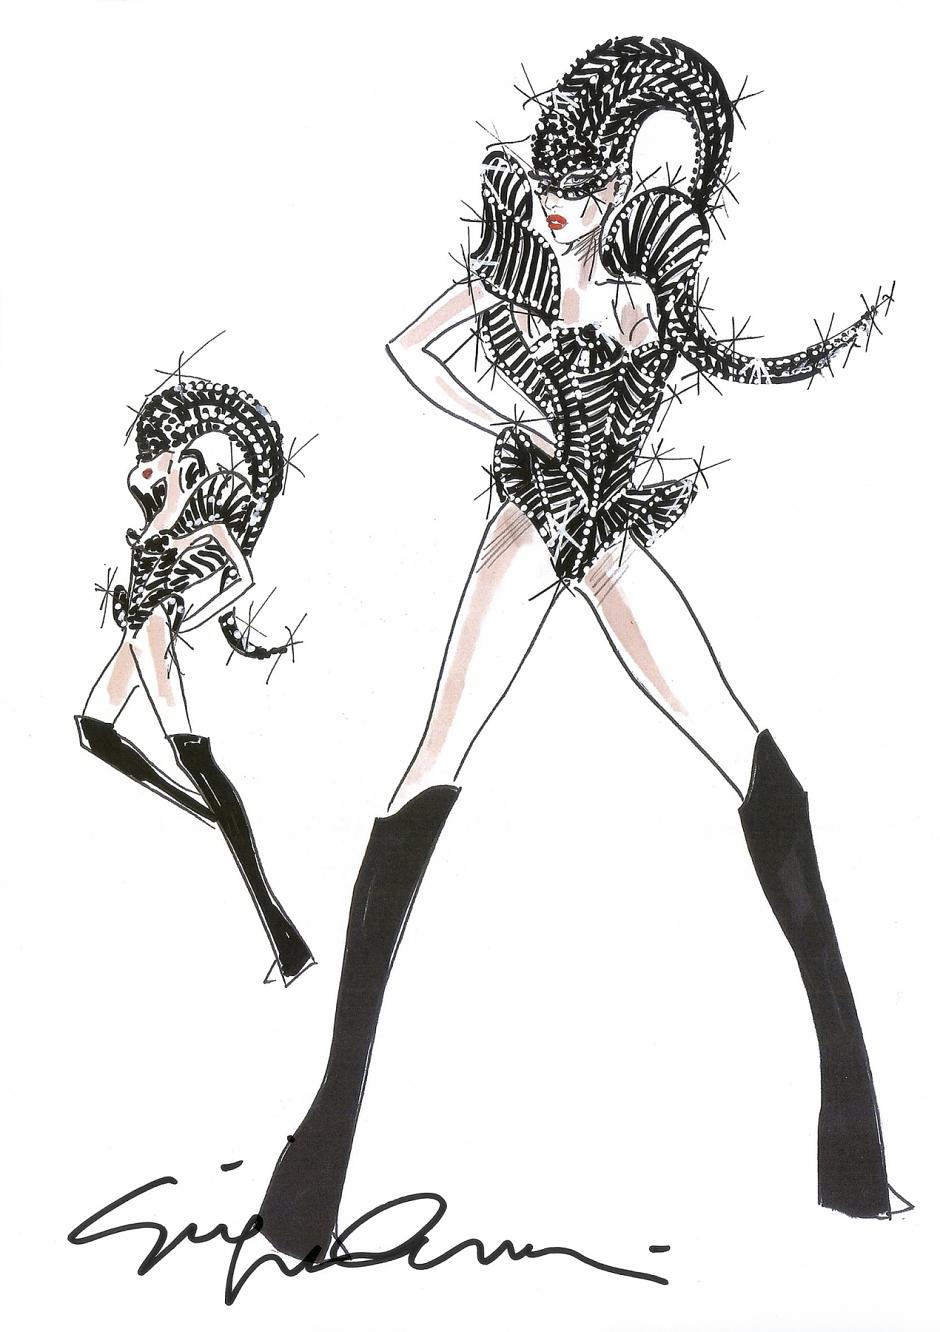 Giorgio Armani costume design for Lady Gaga